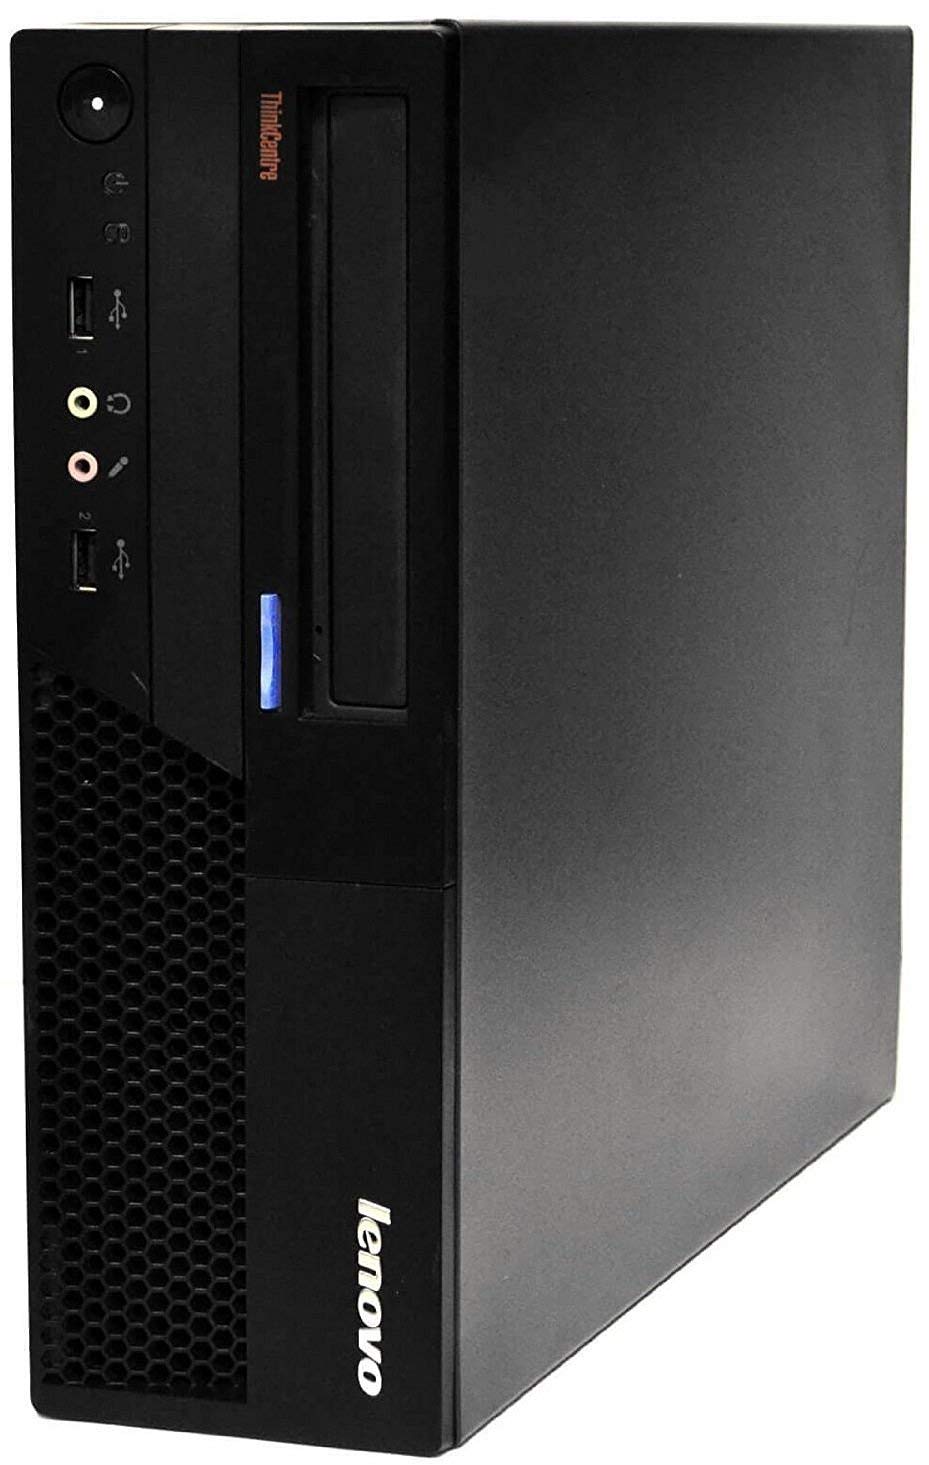 Lenovo ThinkCentre M58 Business Desktop Computer with Intel Core 2 Duo 3.0GHz Processor, 4GB-RAM, 320GB HDD, DVD, Gigabit Ethernet, VGA, Windows 10...